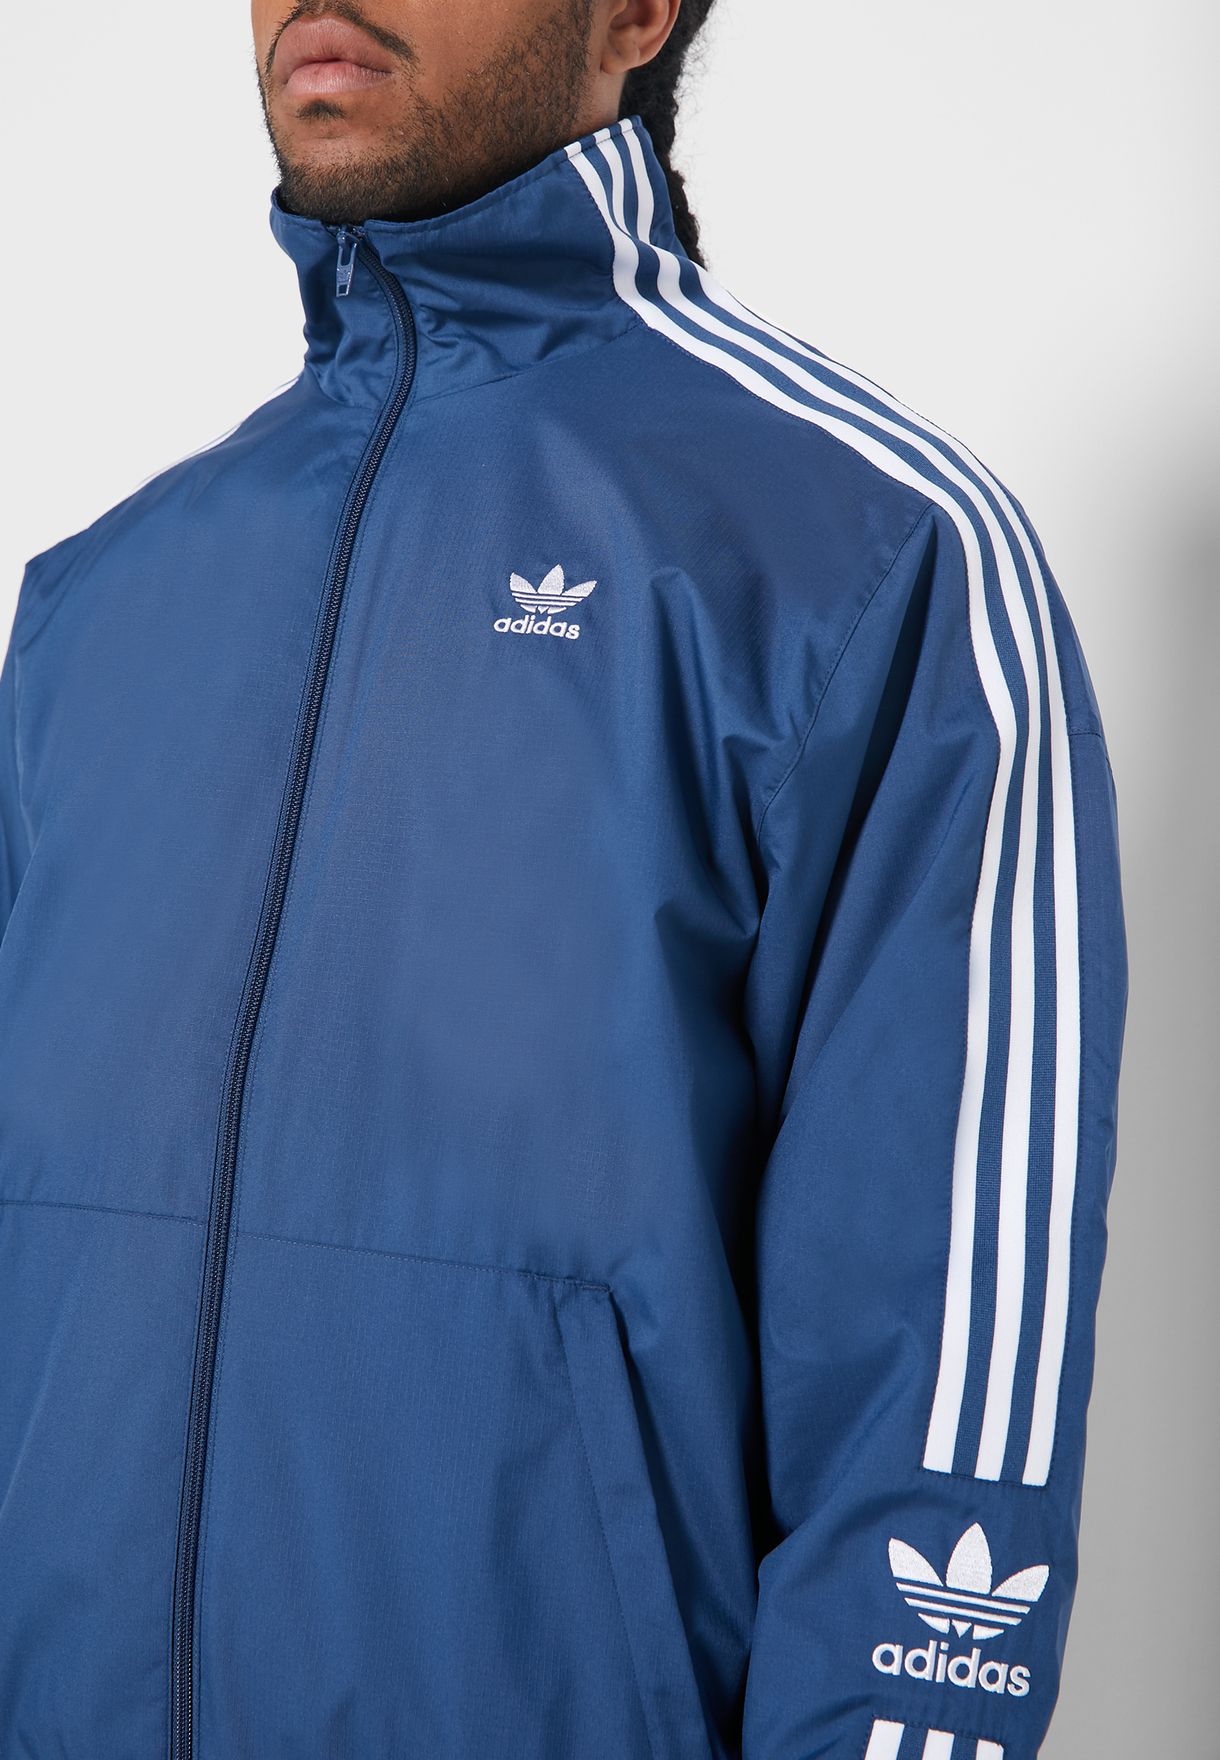 adidas original blue jacket